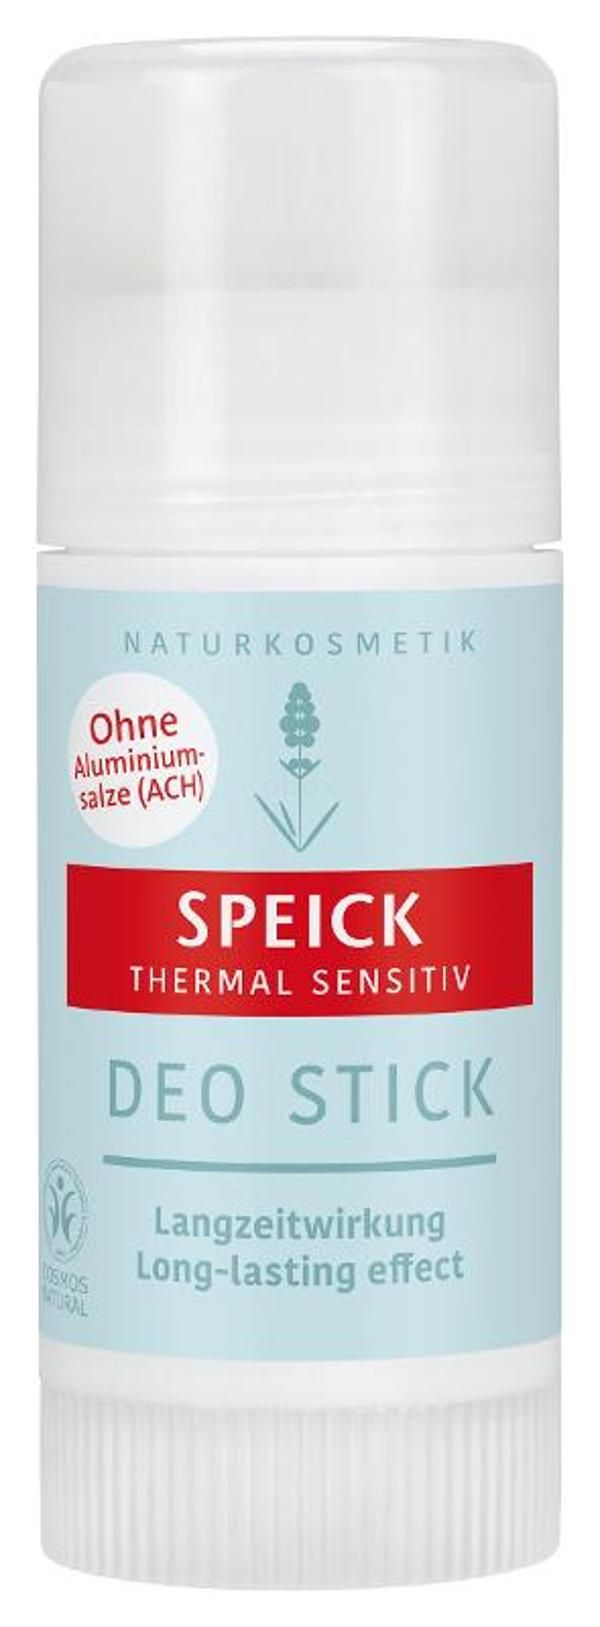 Produktfoto zu Thermal Sensitiv Deo Stick